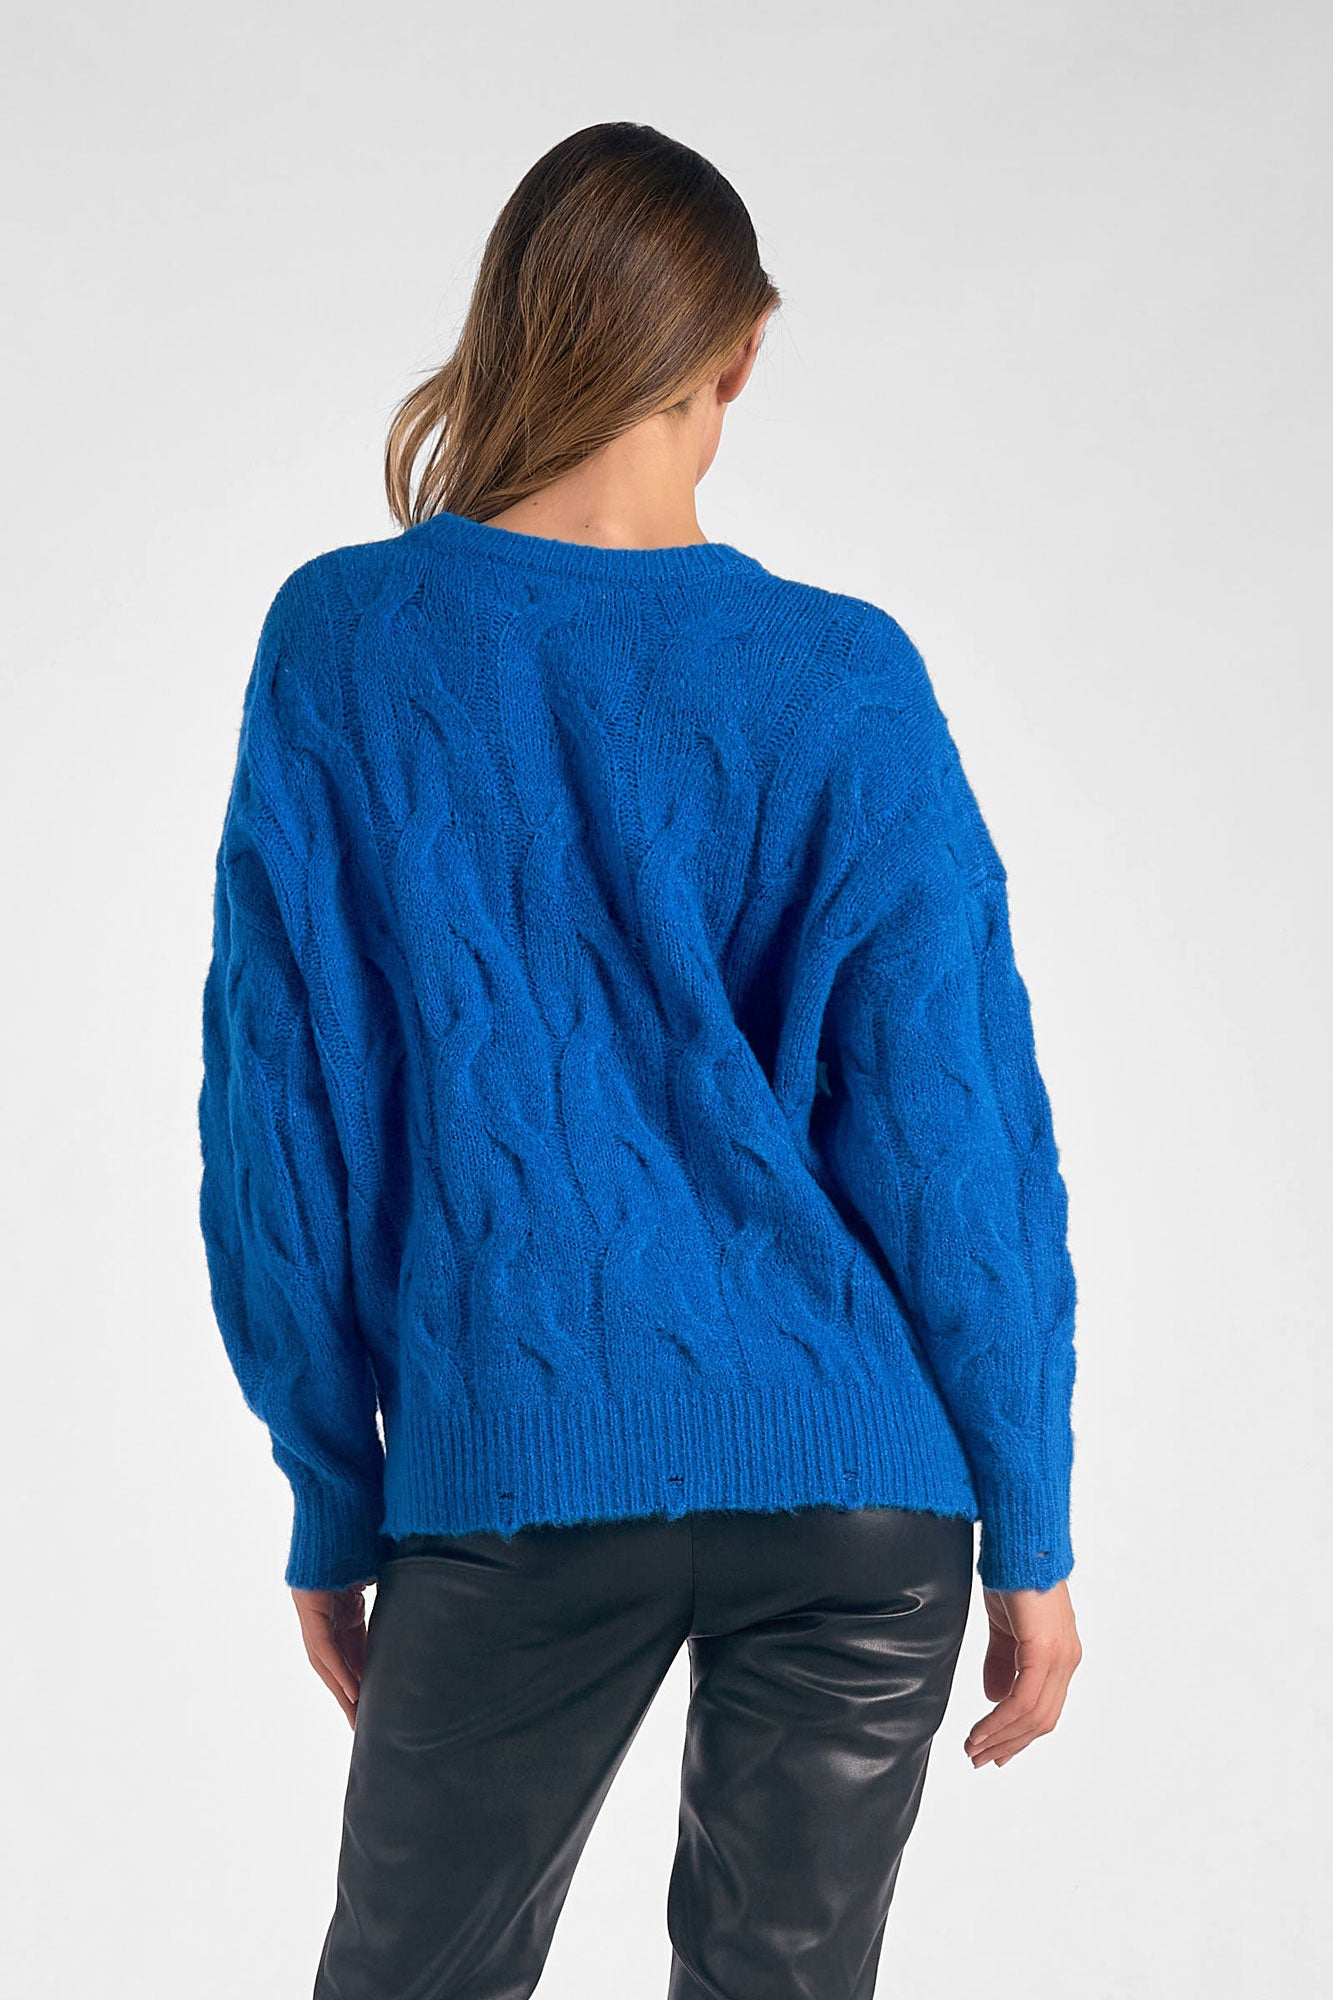 Elan Cobalt Blue Jolly Cable Knit Sweater